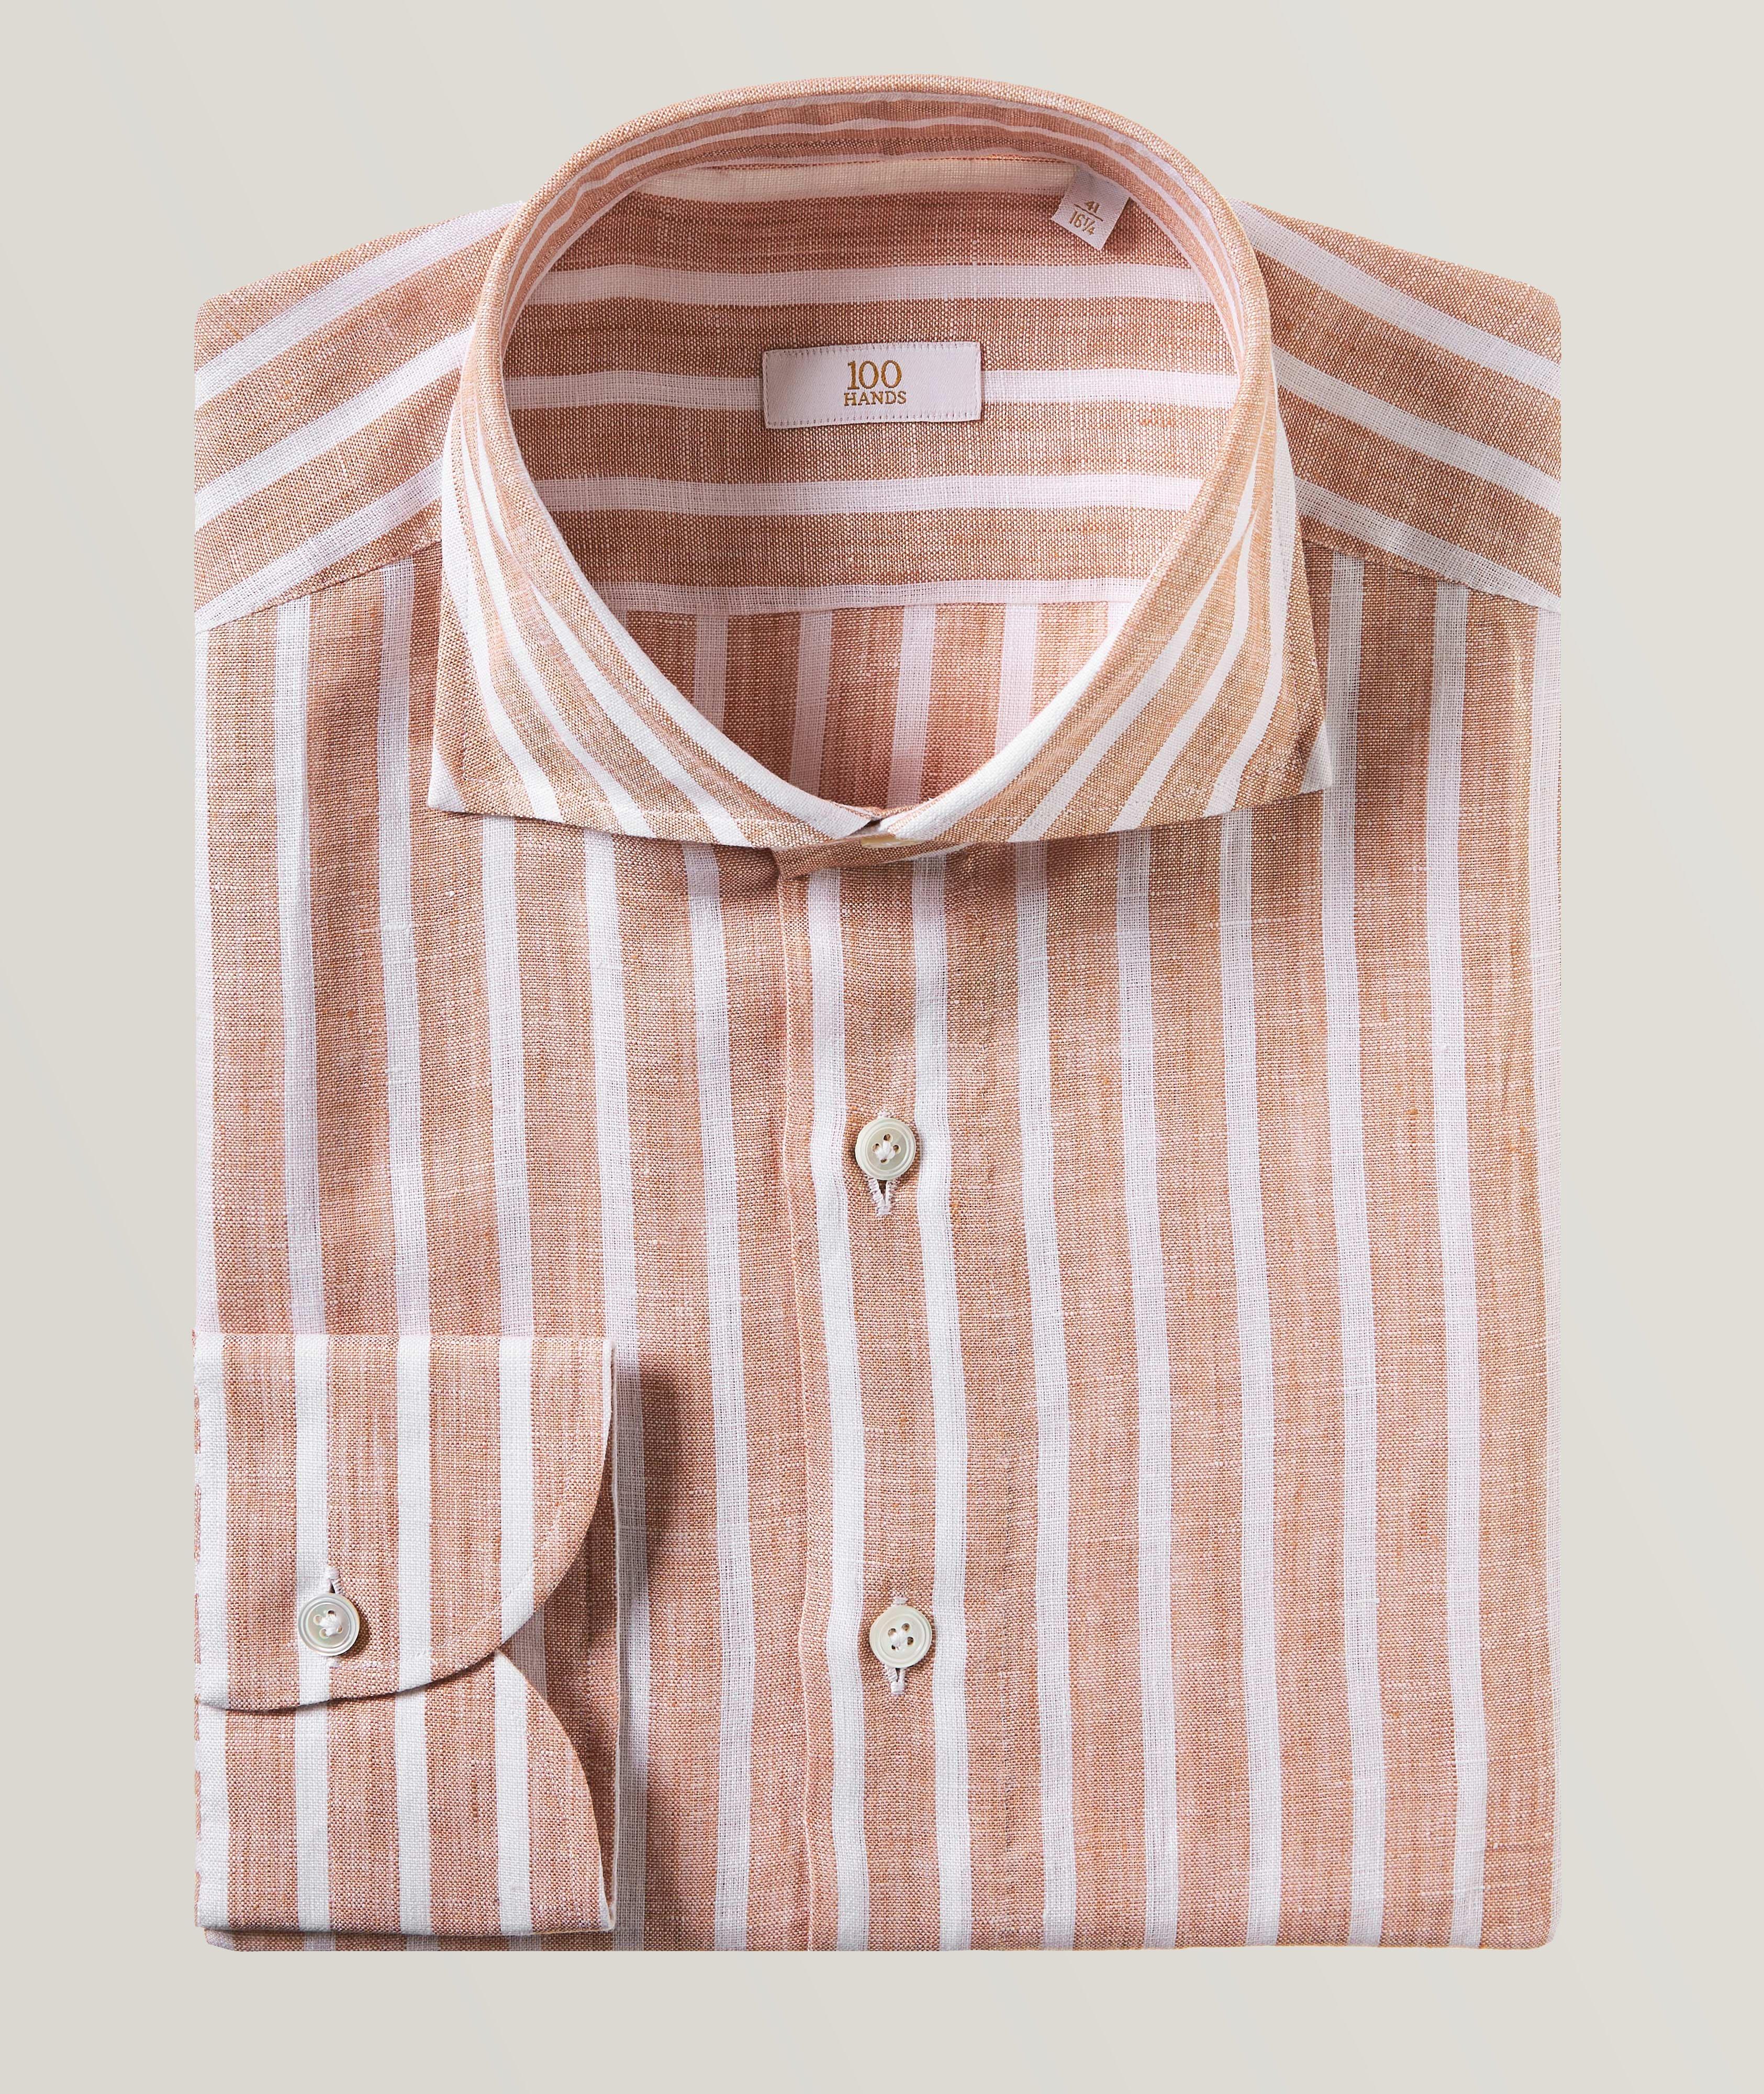 Chemise habillée en lin à rayures, collection or image 0